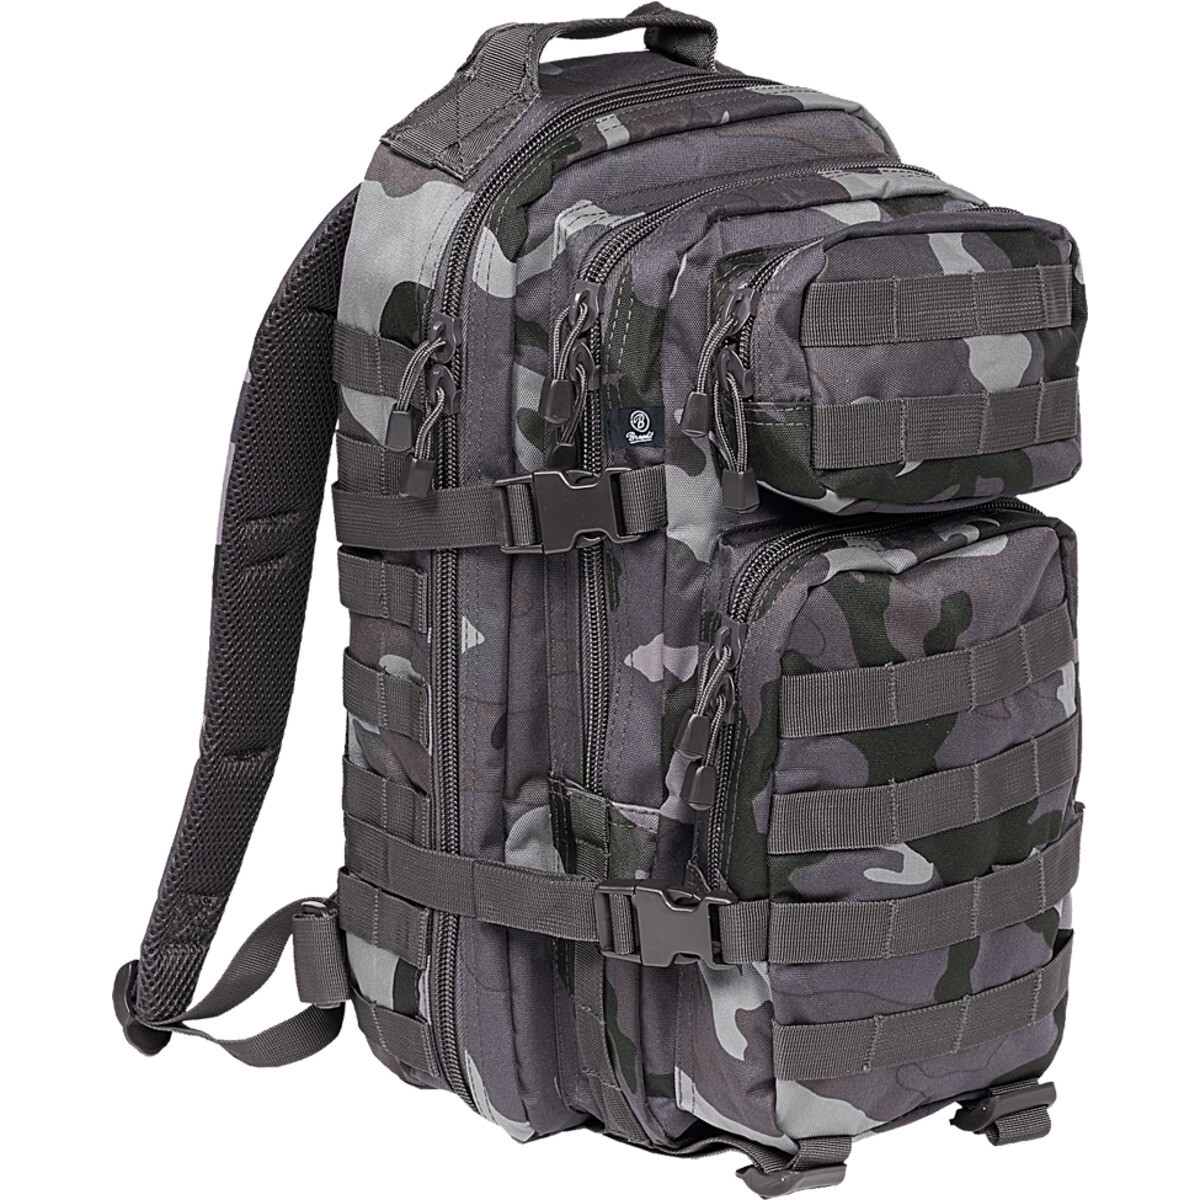 Medium US Cooper Backpack - Camouflage